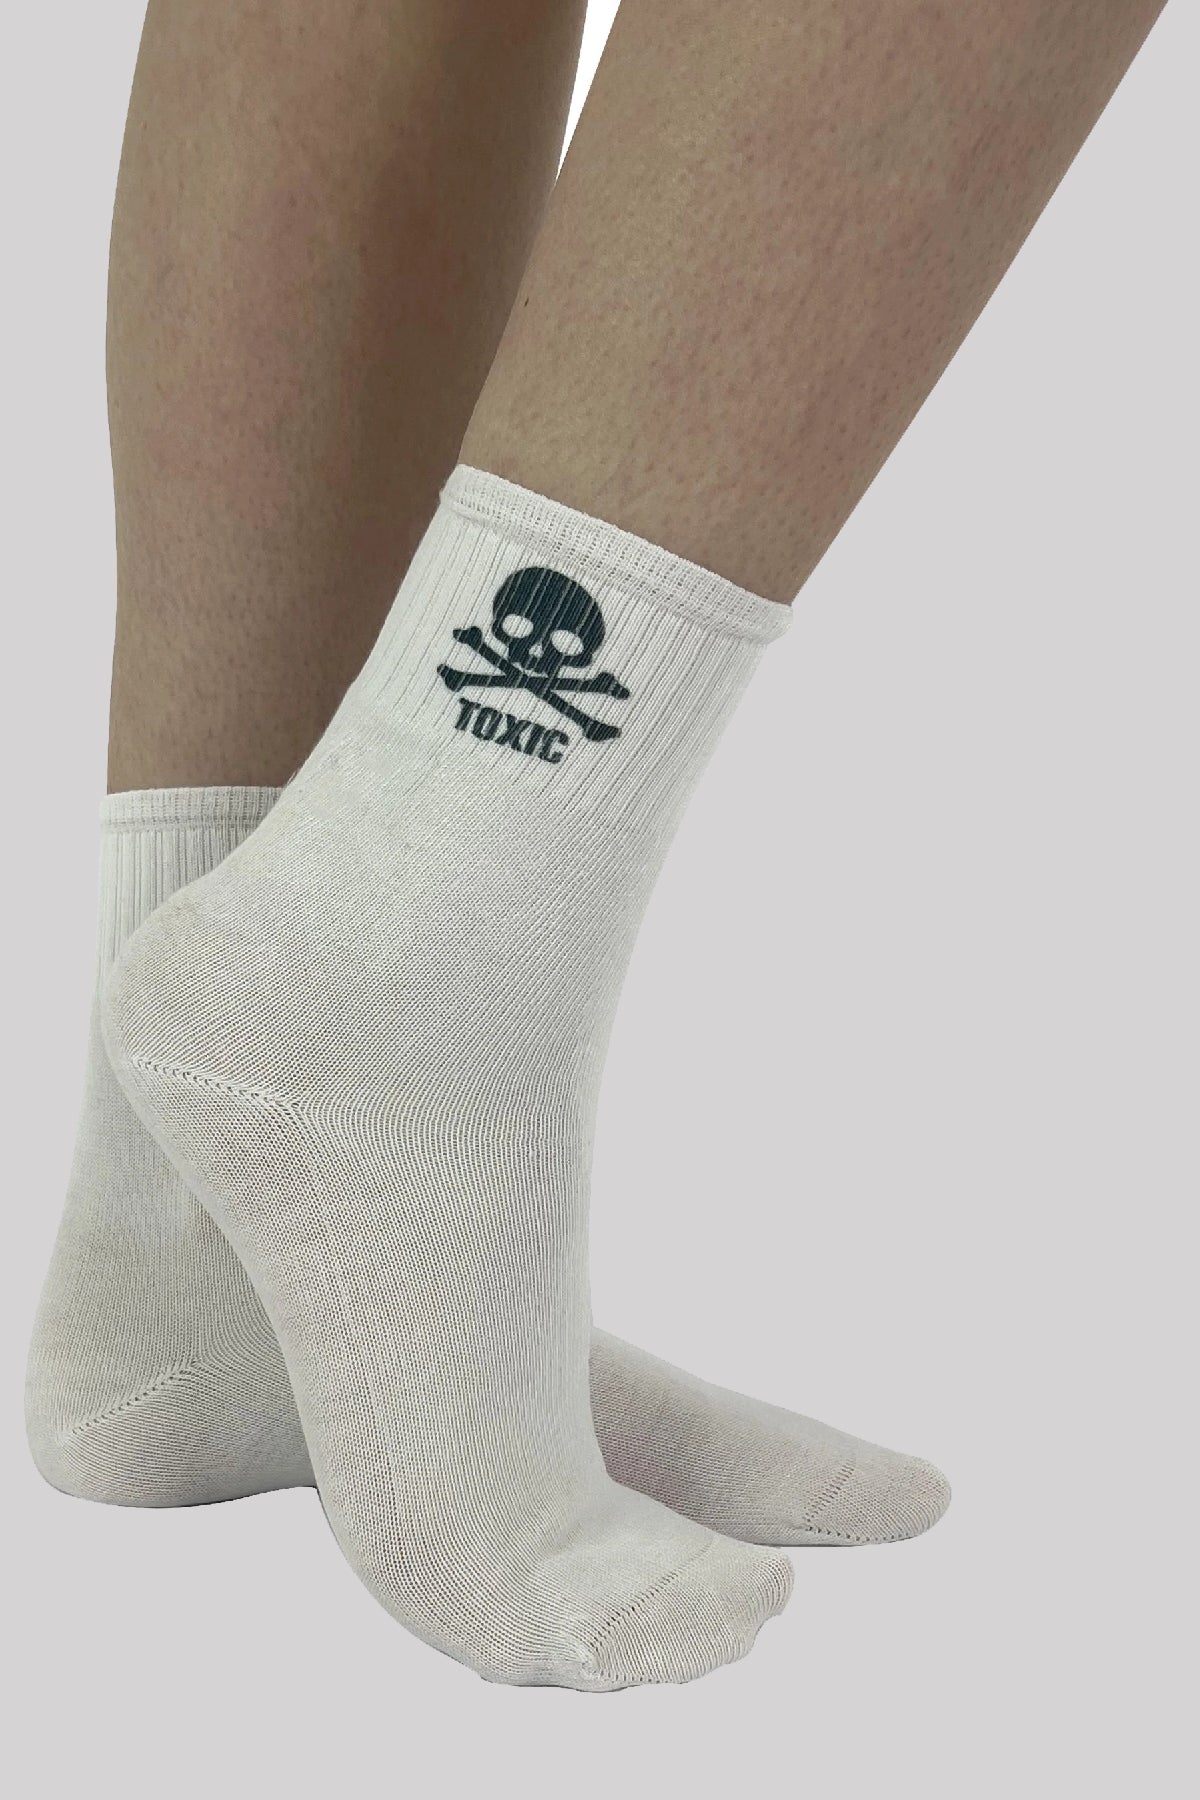 Pamela Mann Printed Crew Socks, Toxic (One-Size)